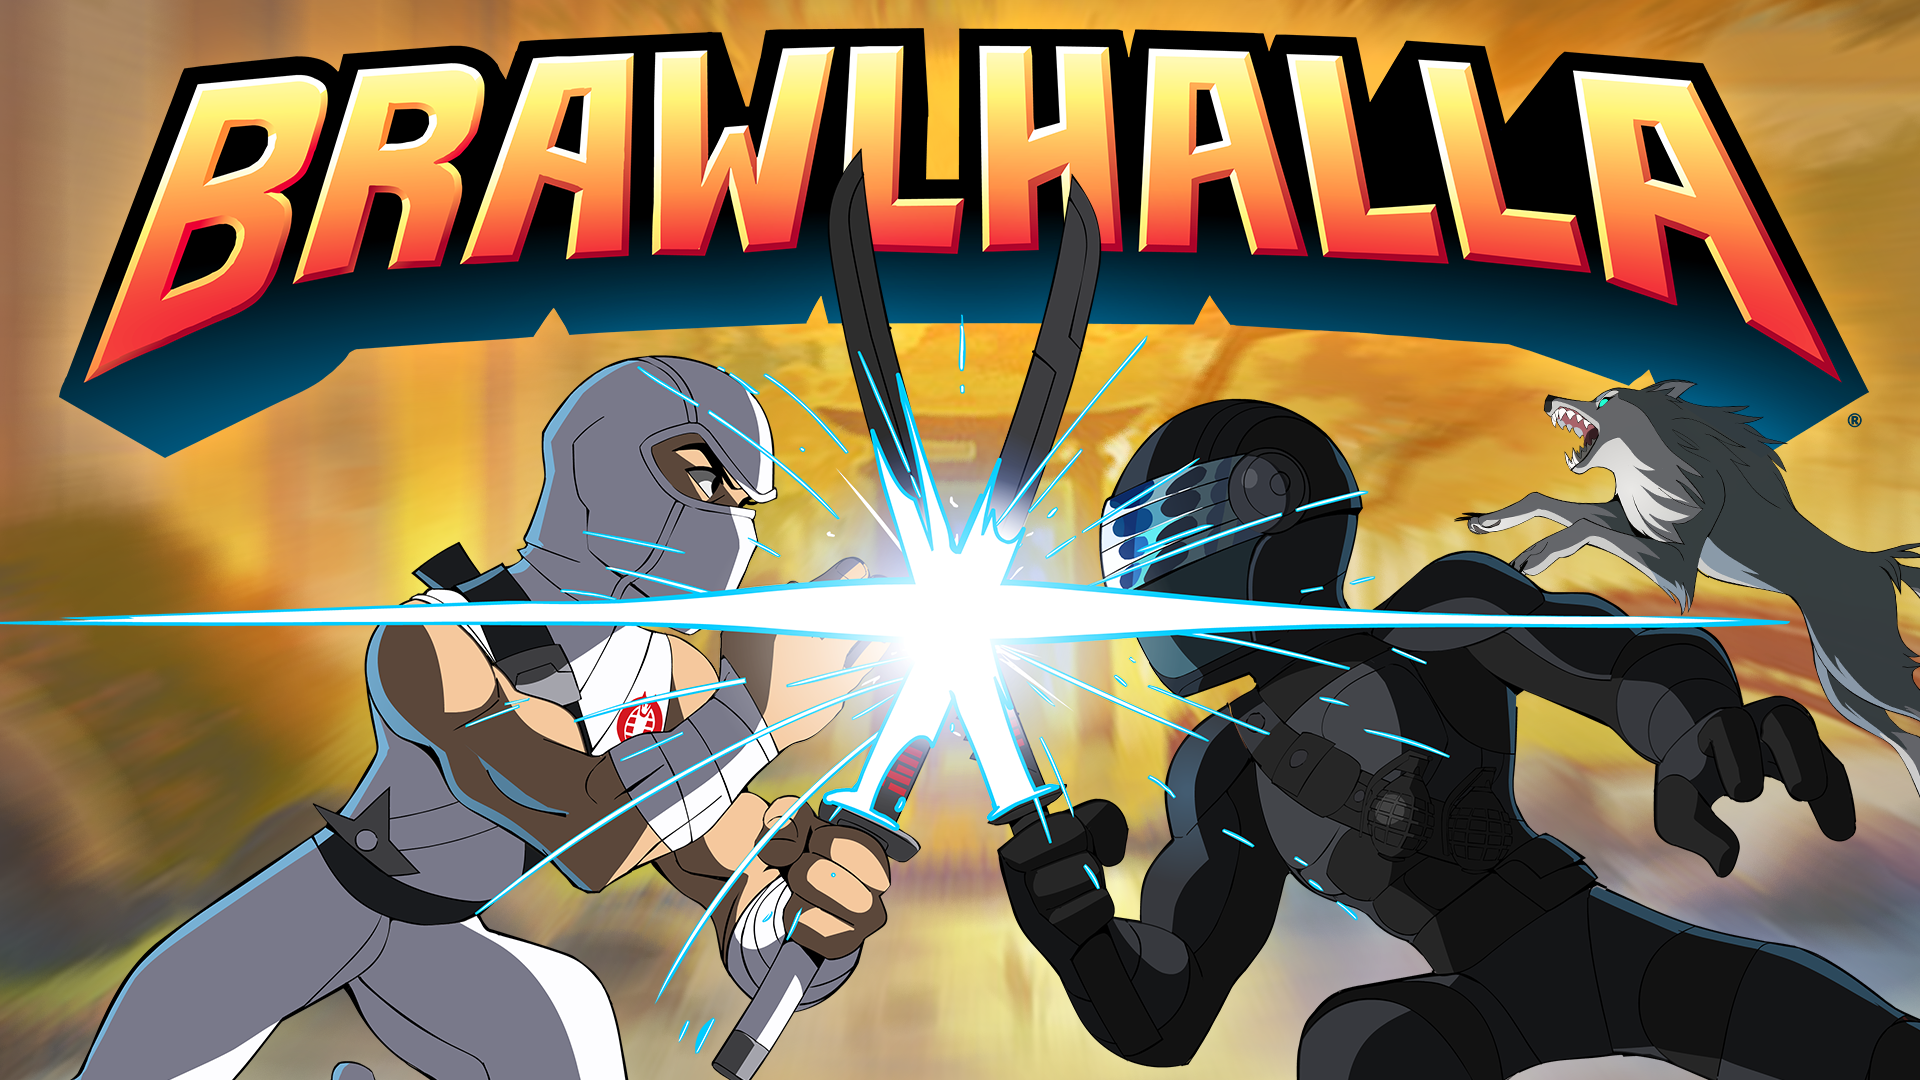 G.I. Joe Crosses Over Into Brawlhalla on February 23rd!